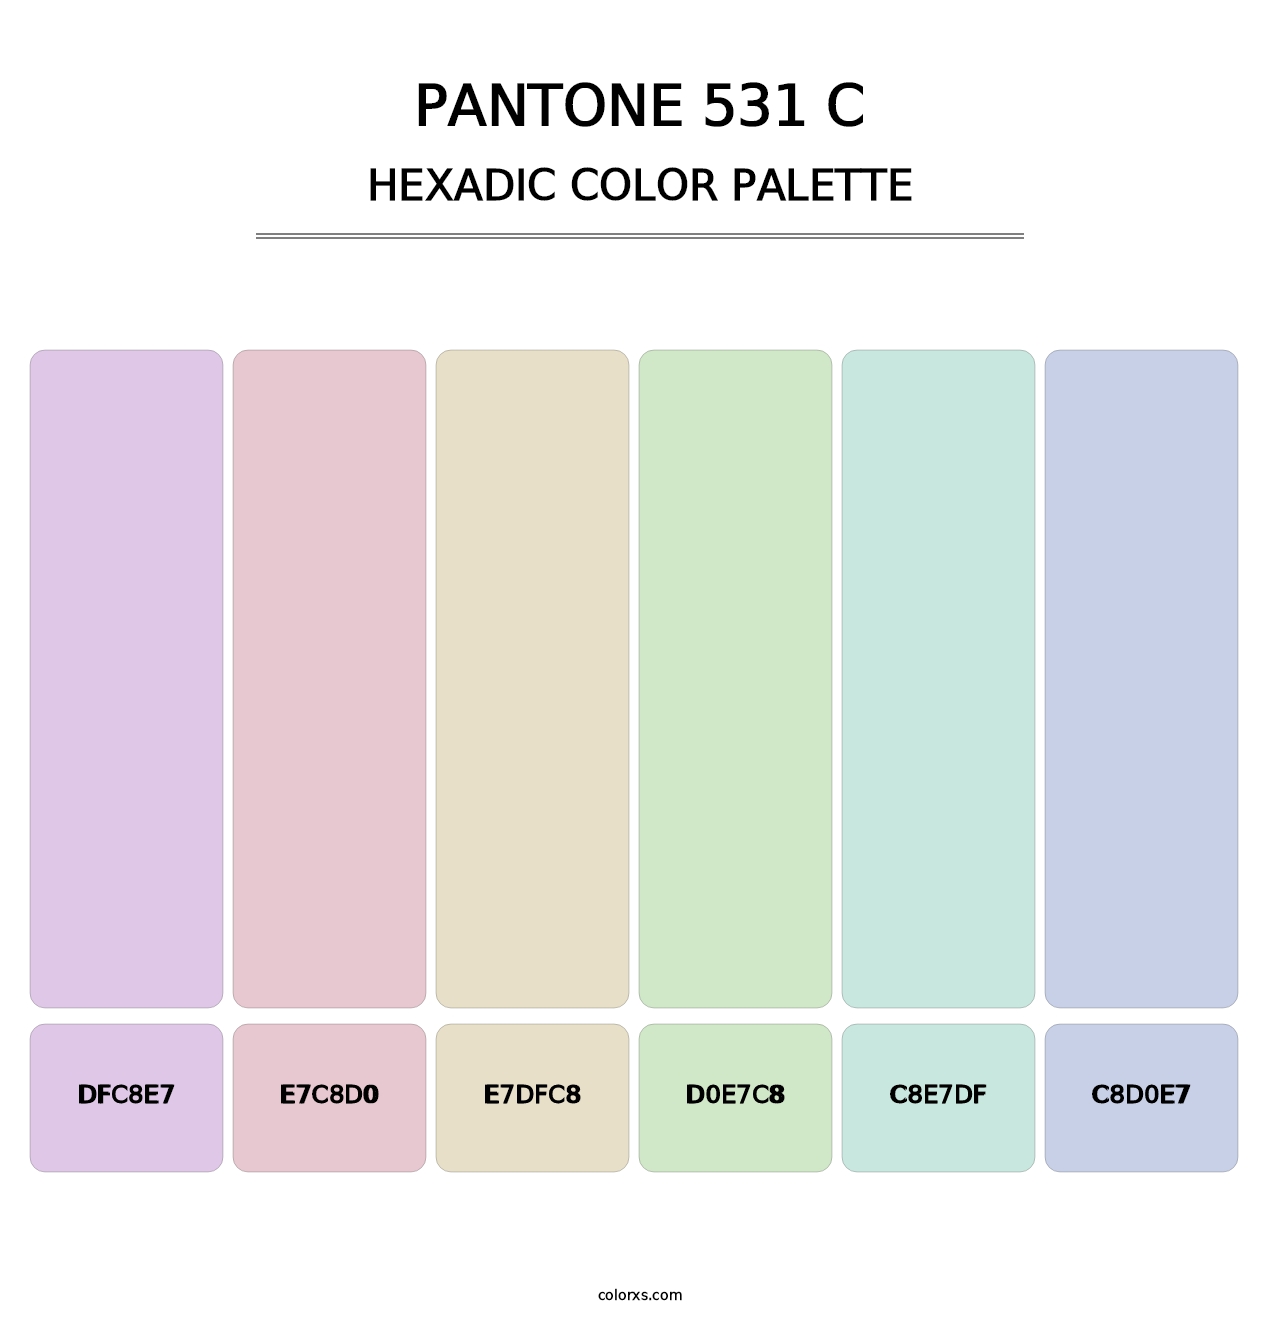 PANTONE 531 C - Hexadic Color Palette